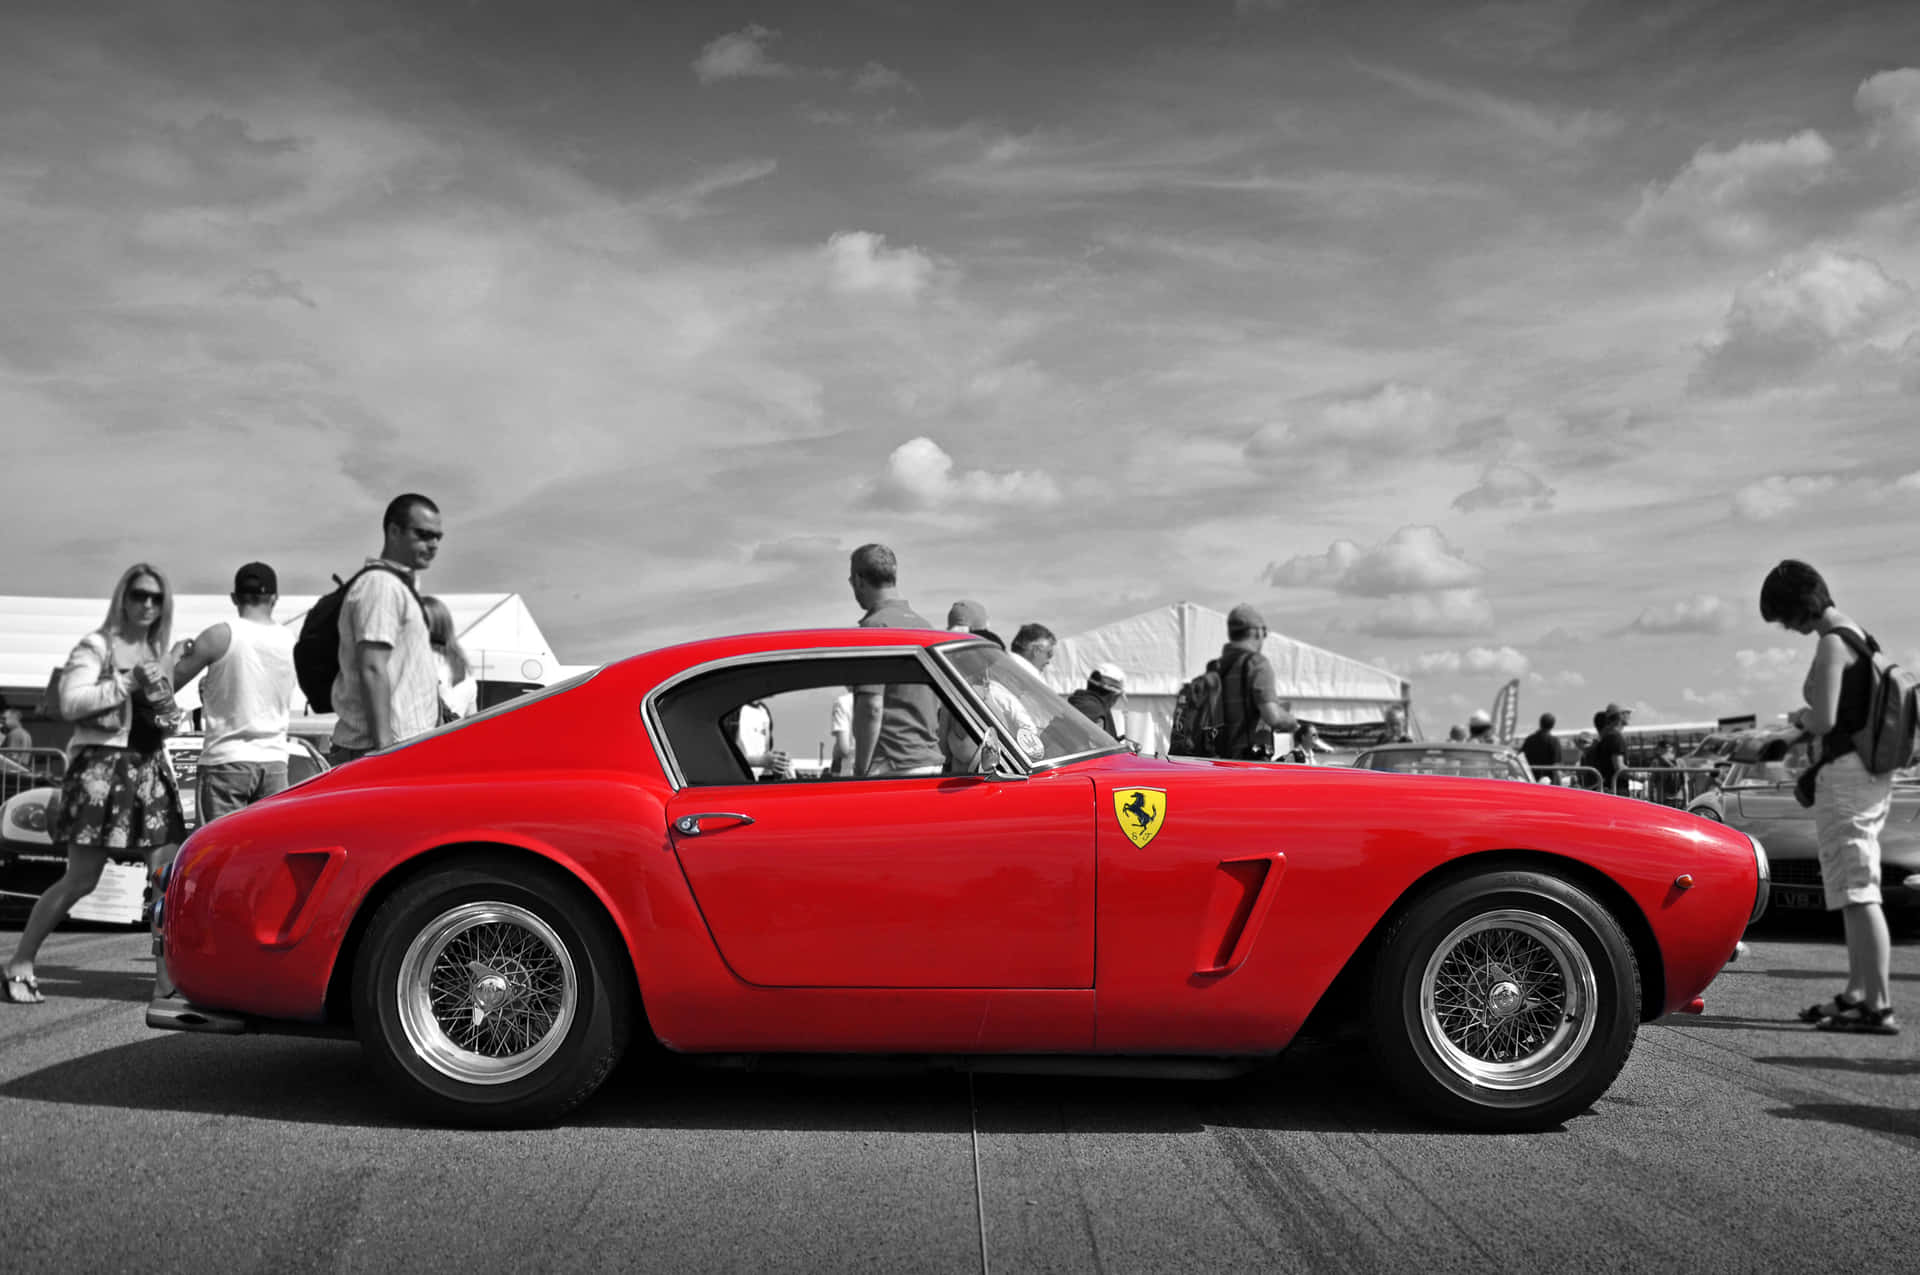 Free Classic Ferrari Wallpaper Downloads, [100+] Classic Ferrari Wallpapers  for FREE 